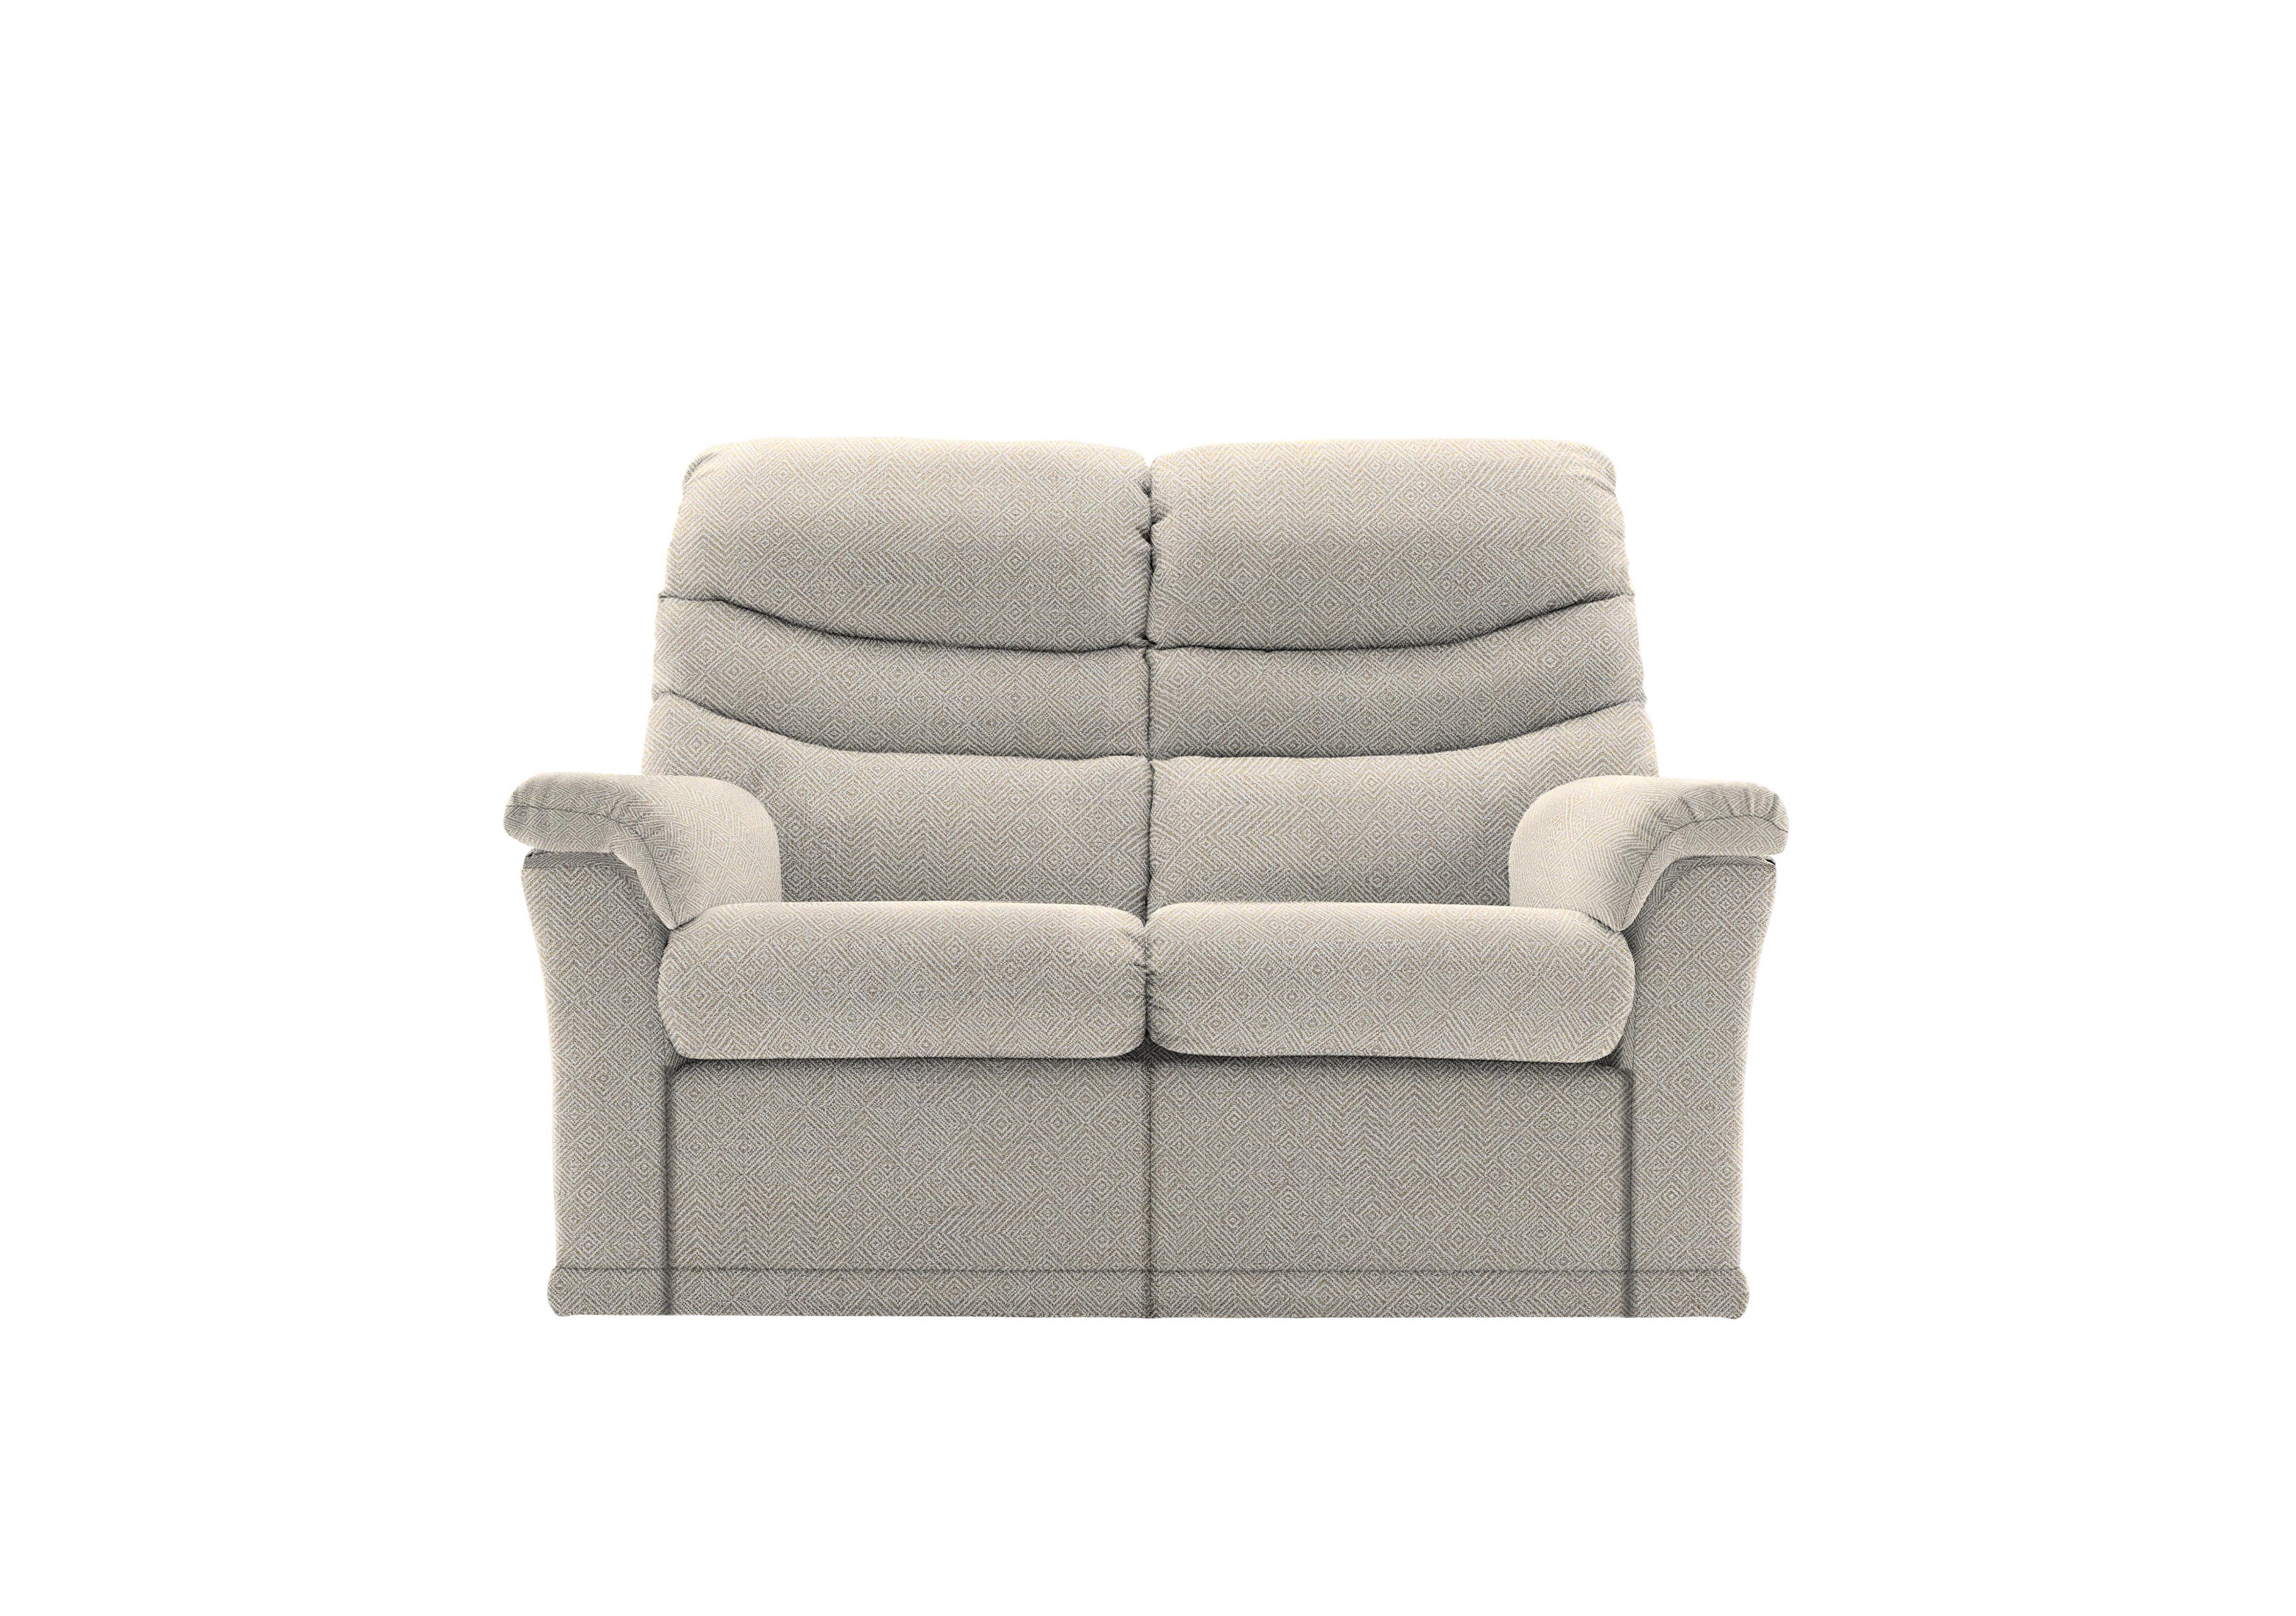 Malvern 2 Seater Fabric Sofa in B011 Nebular Blush on Furniture Village